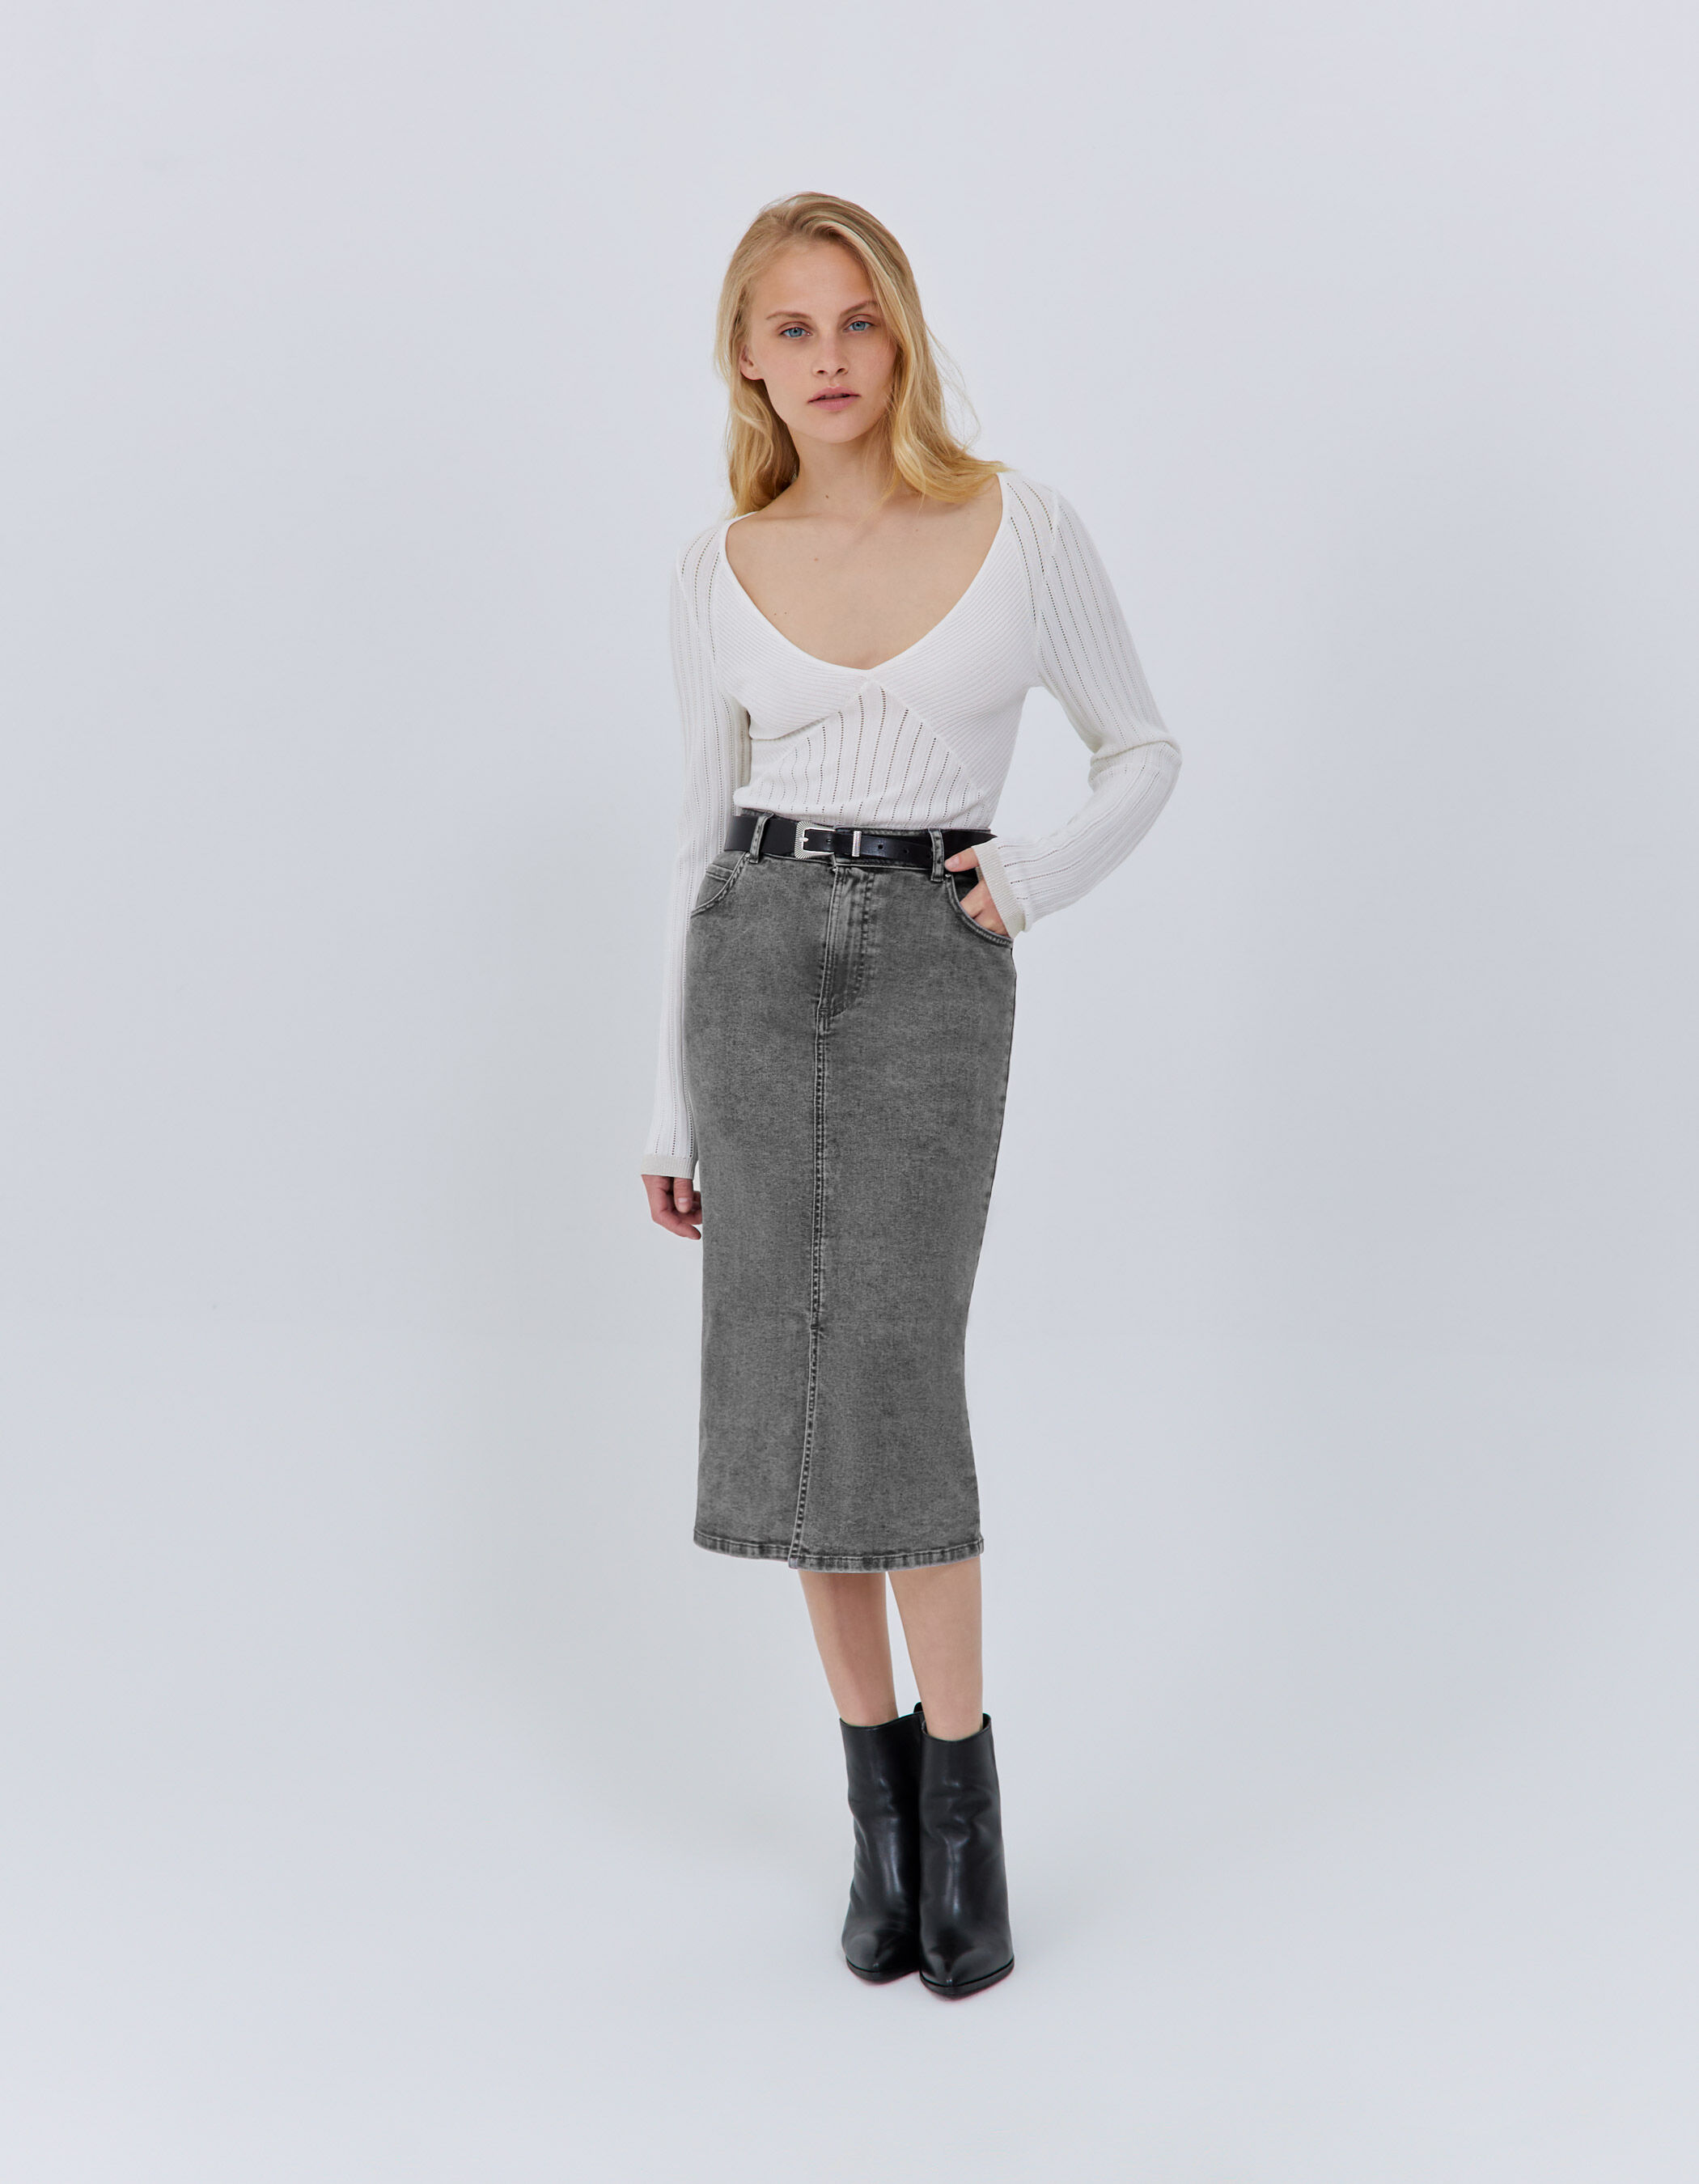 Women's grey denim pencil skirt